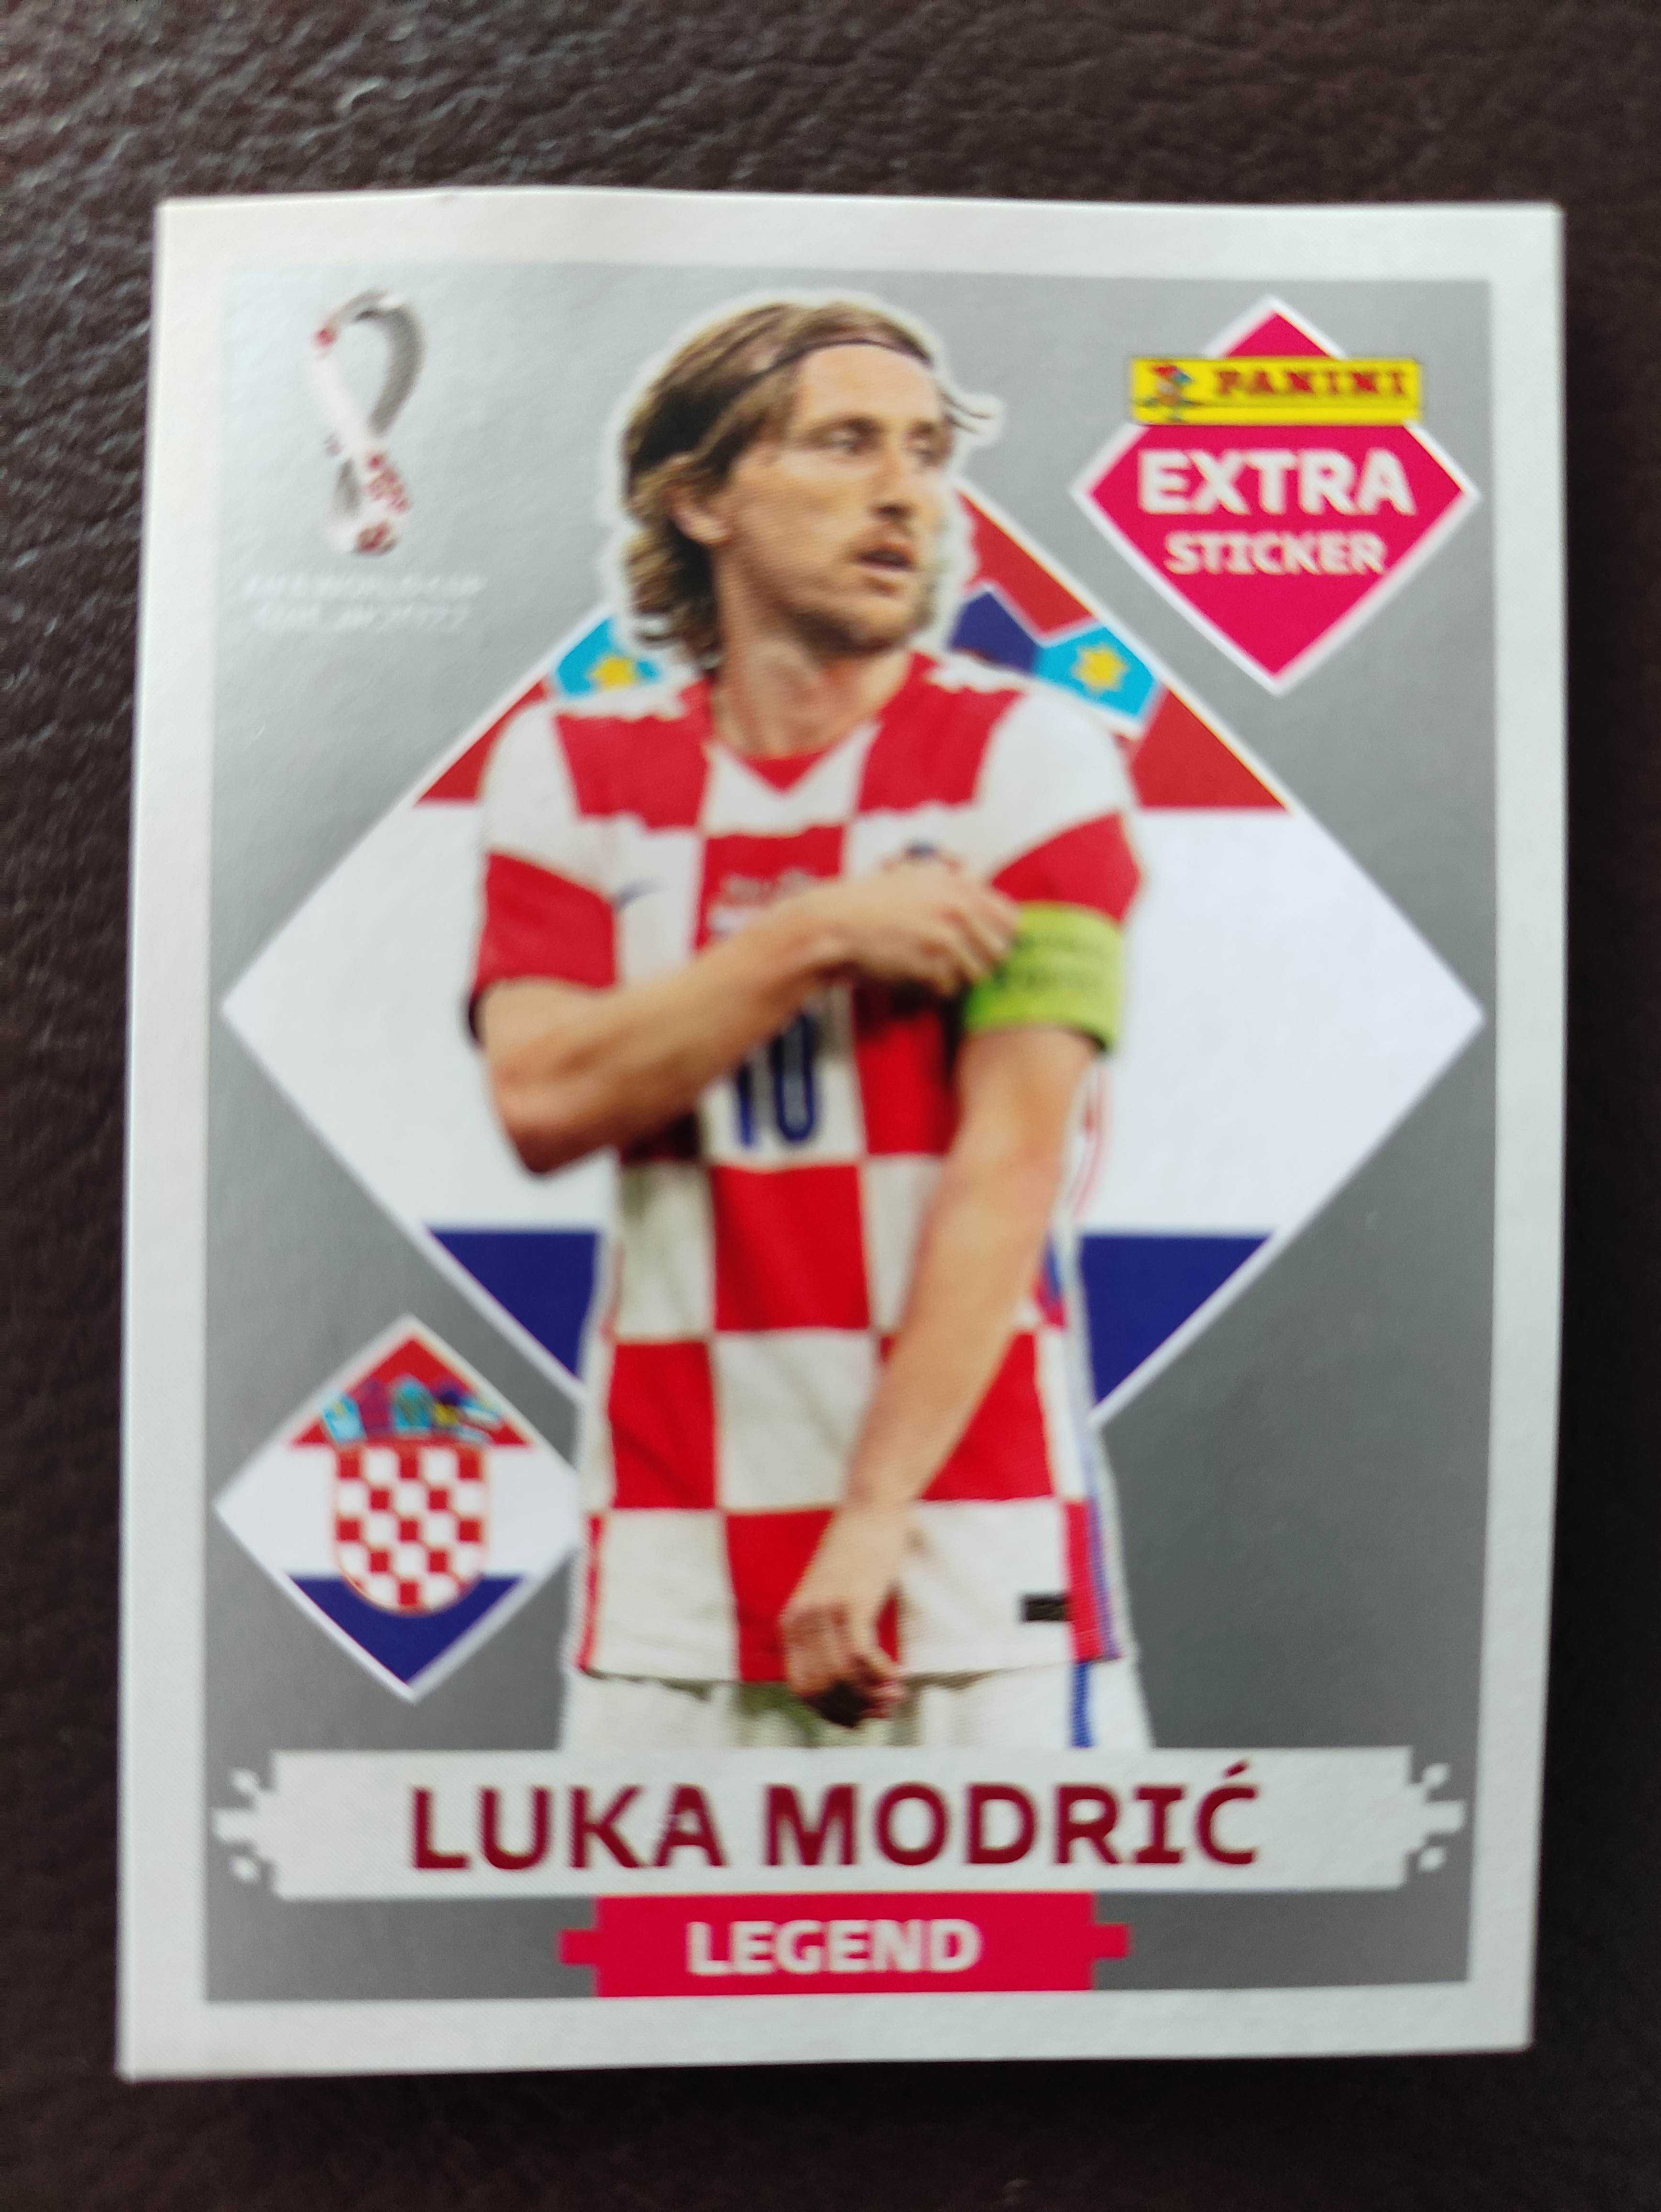 Catar Legend Luca Modric